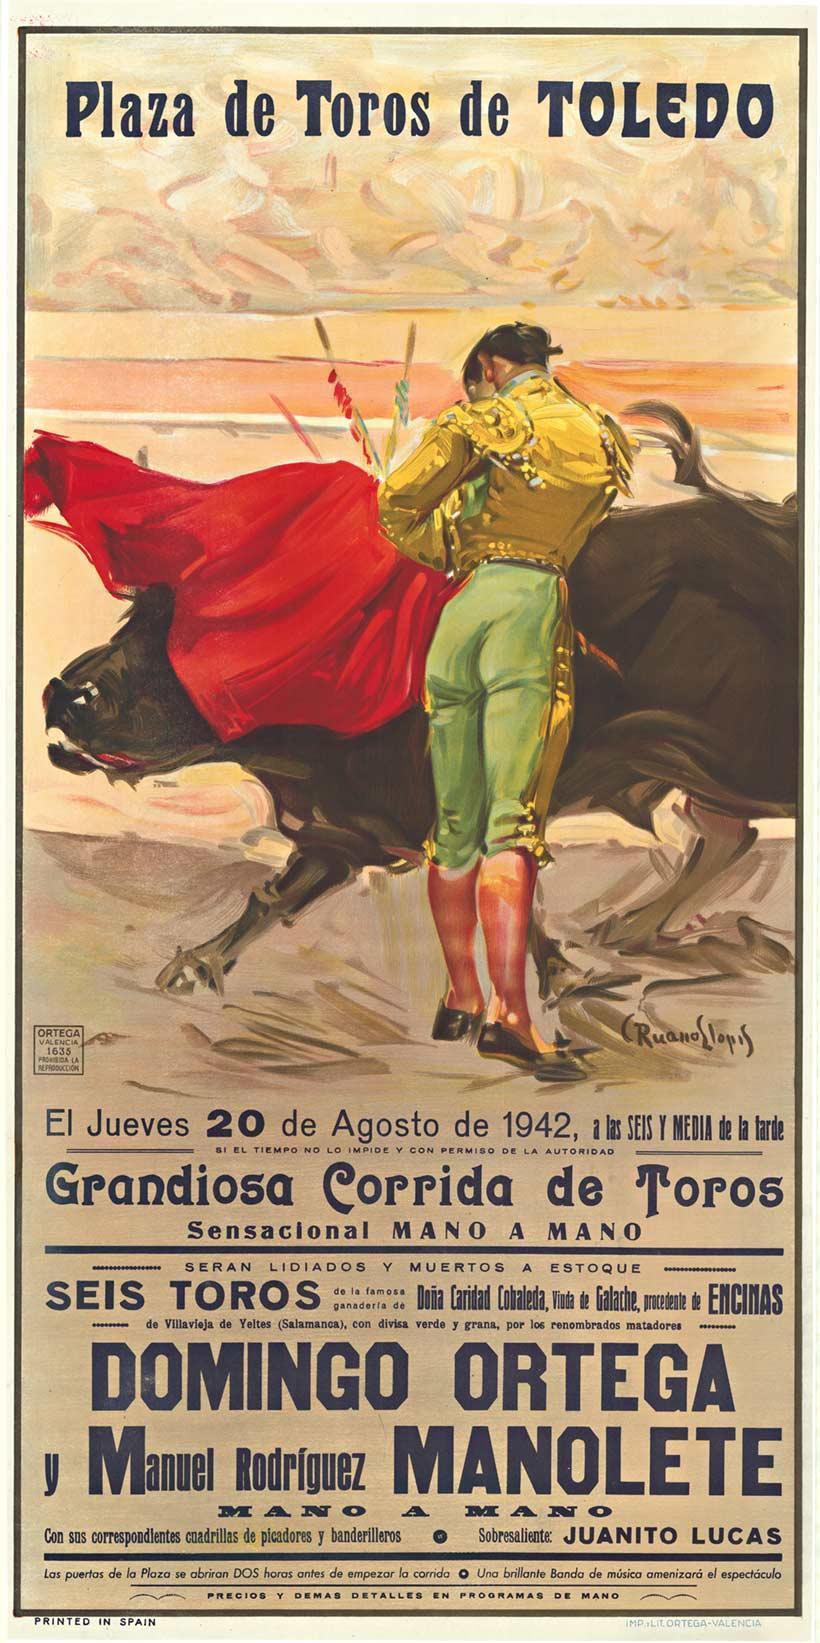 Carlos Ruano Llopis Figurative Print - Original 1942 Plaza de Toledo vintage bullfighting poster